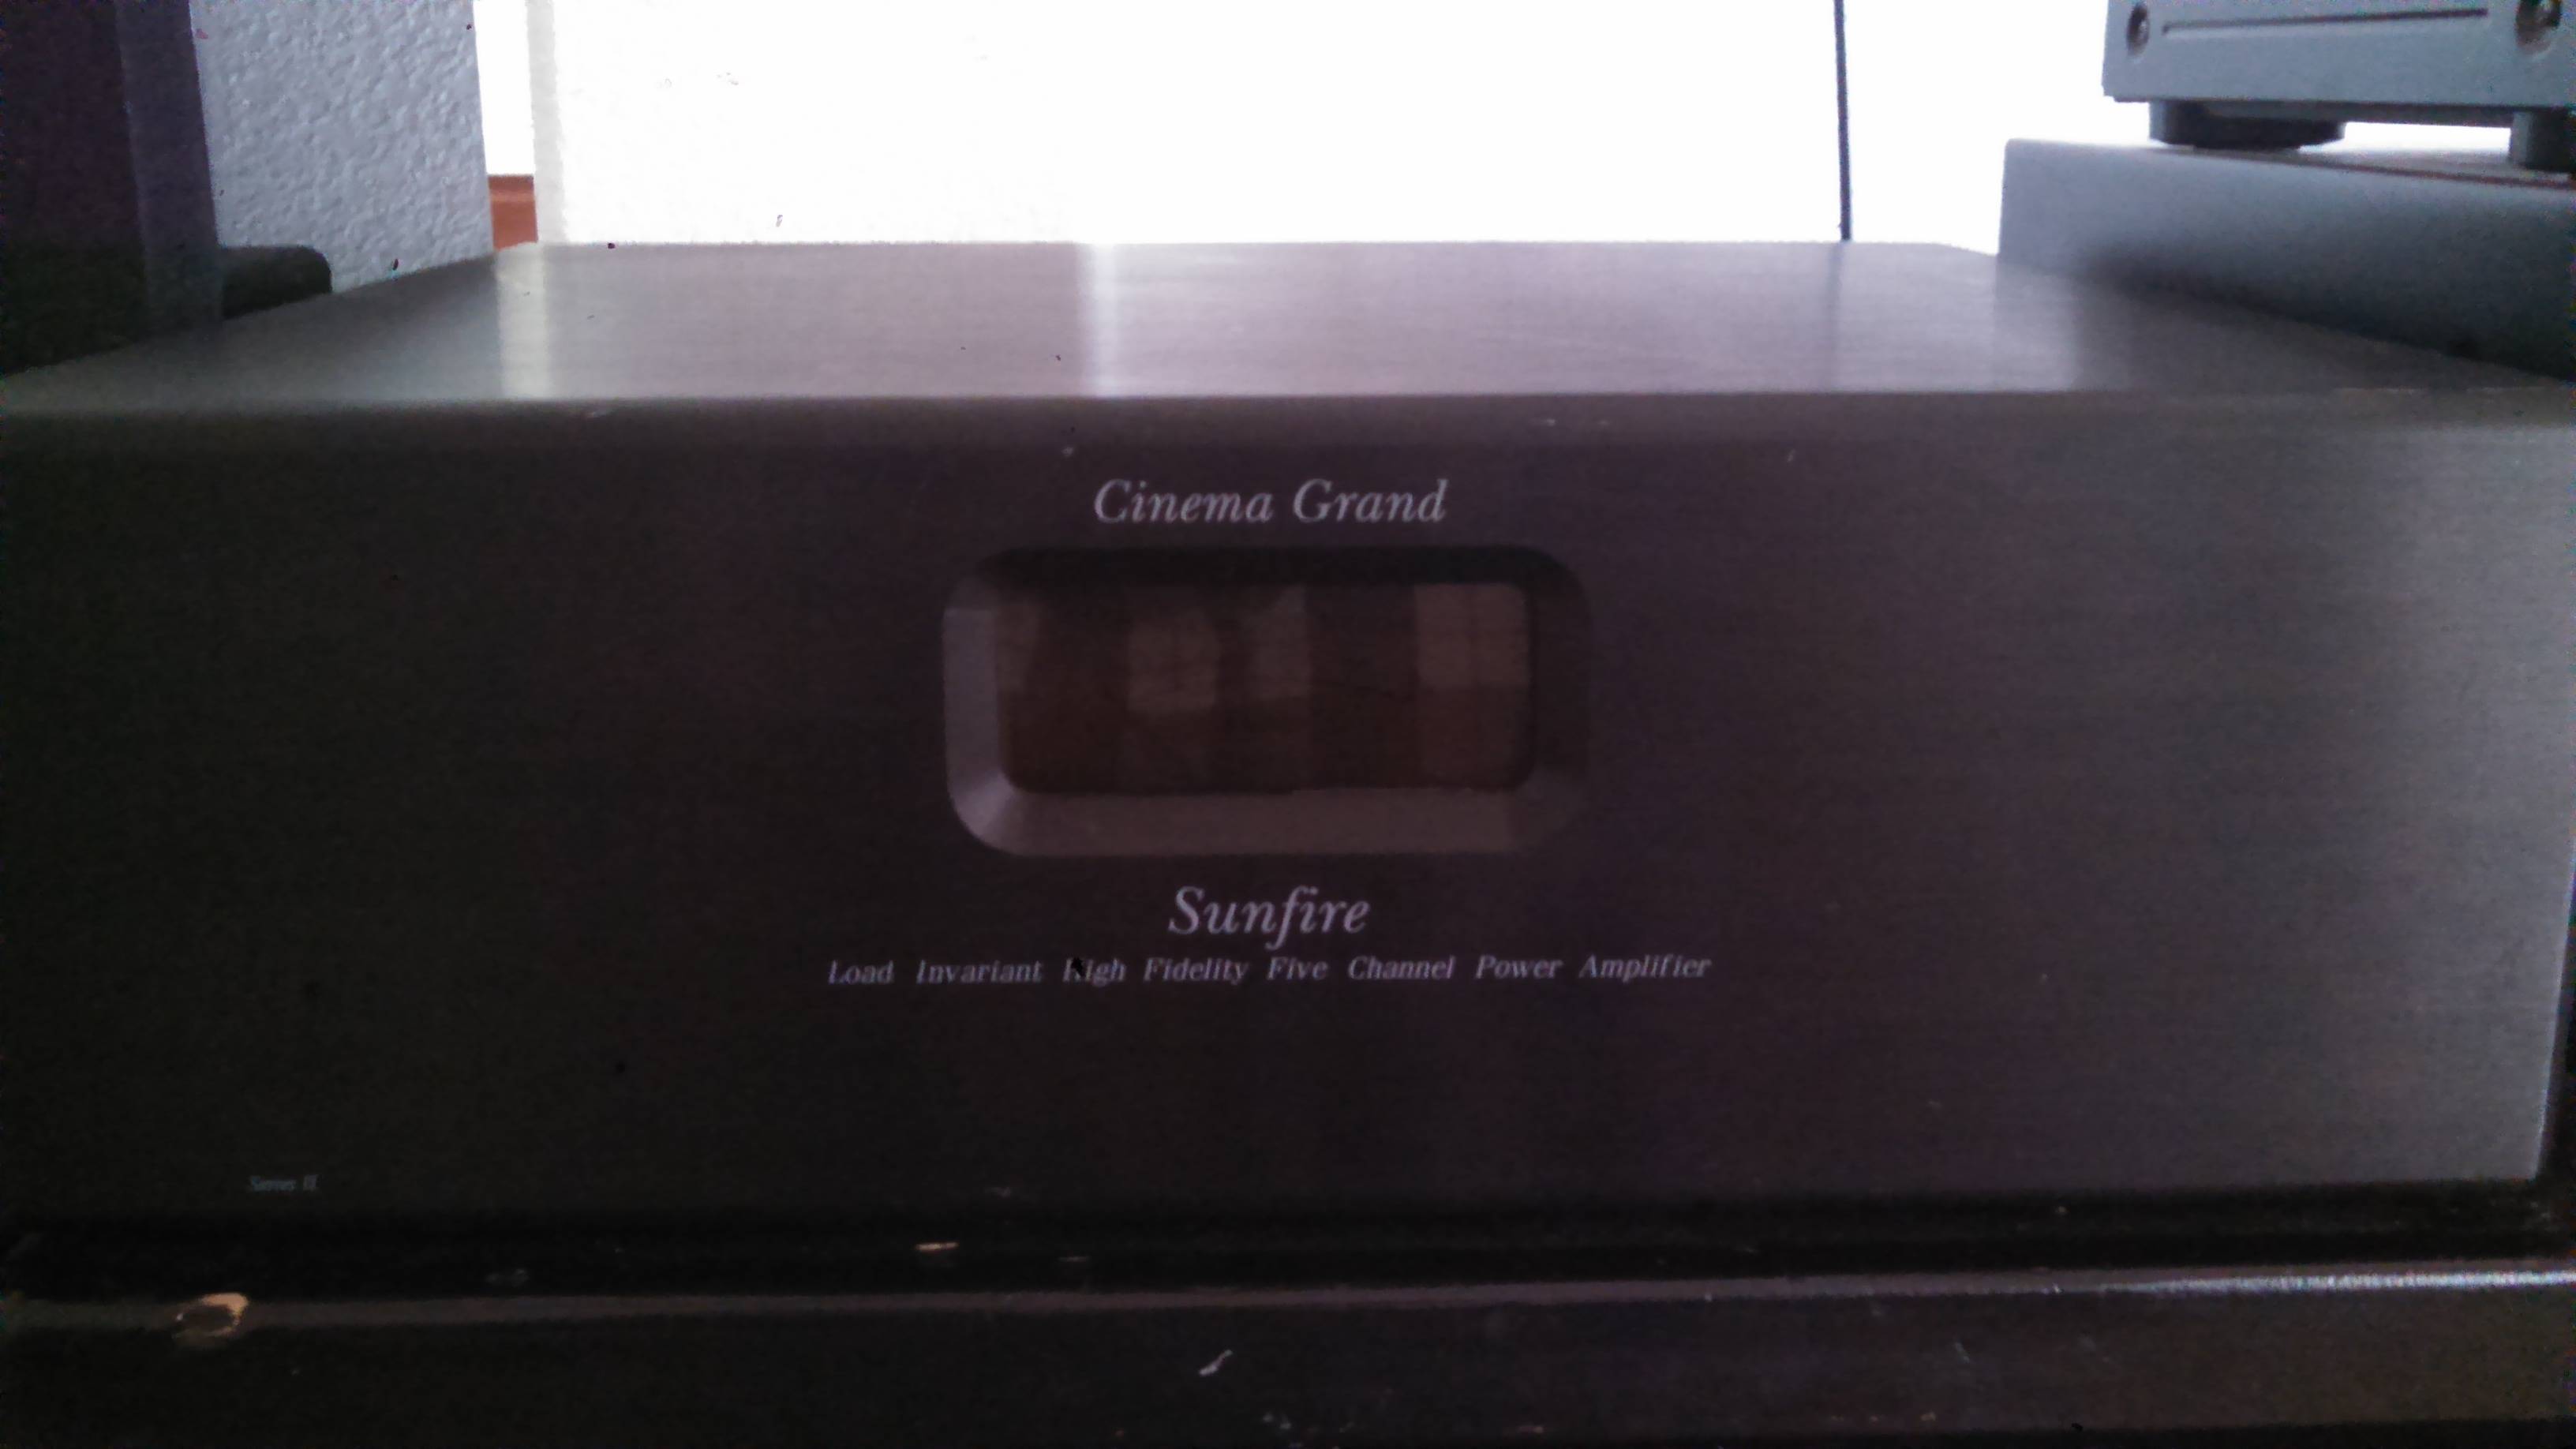 Sunfire Cinema Grand (Series II Sig)